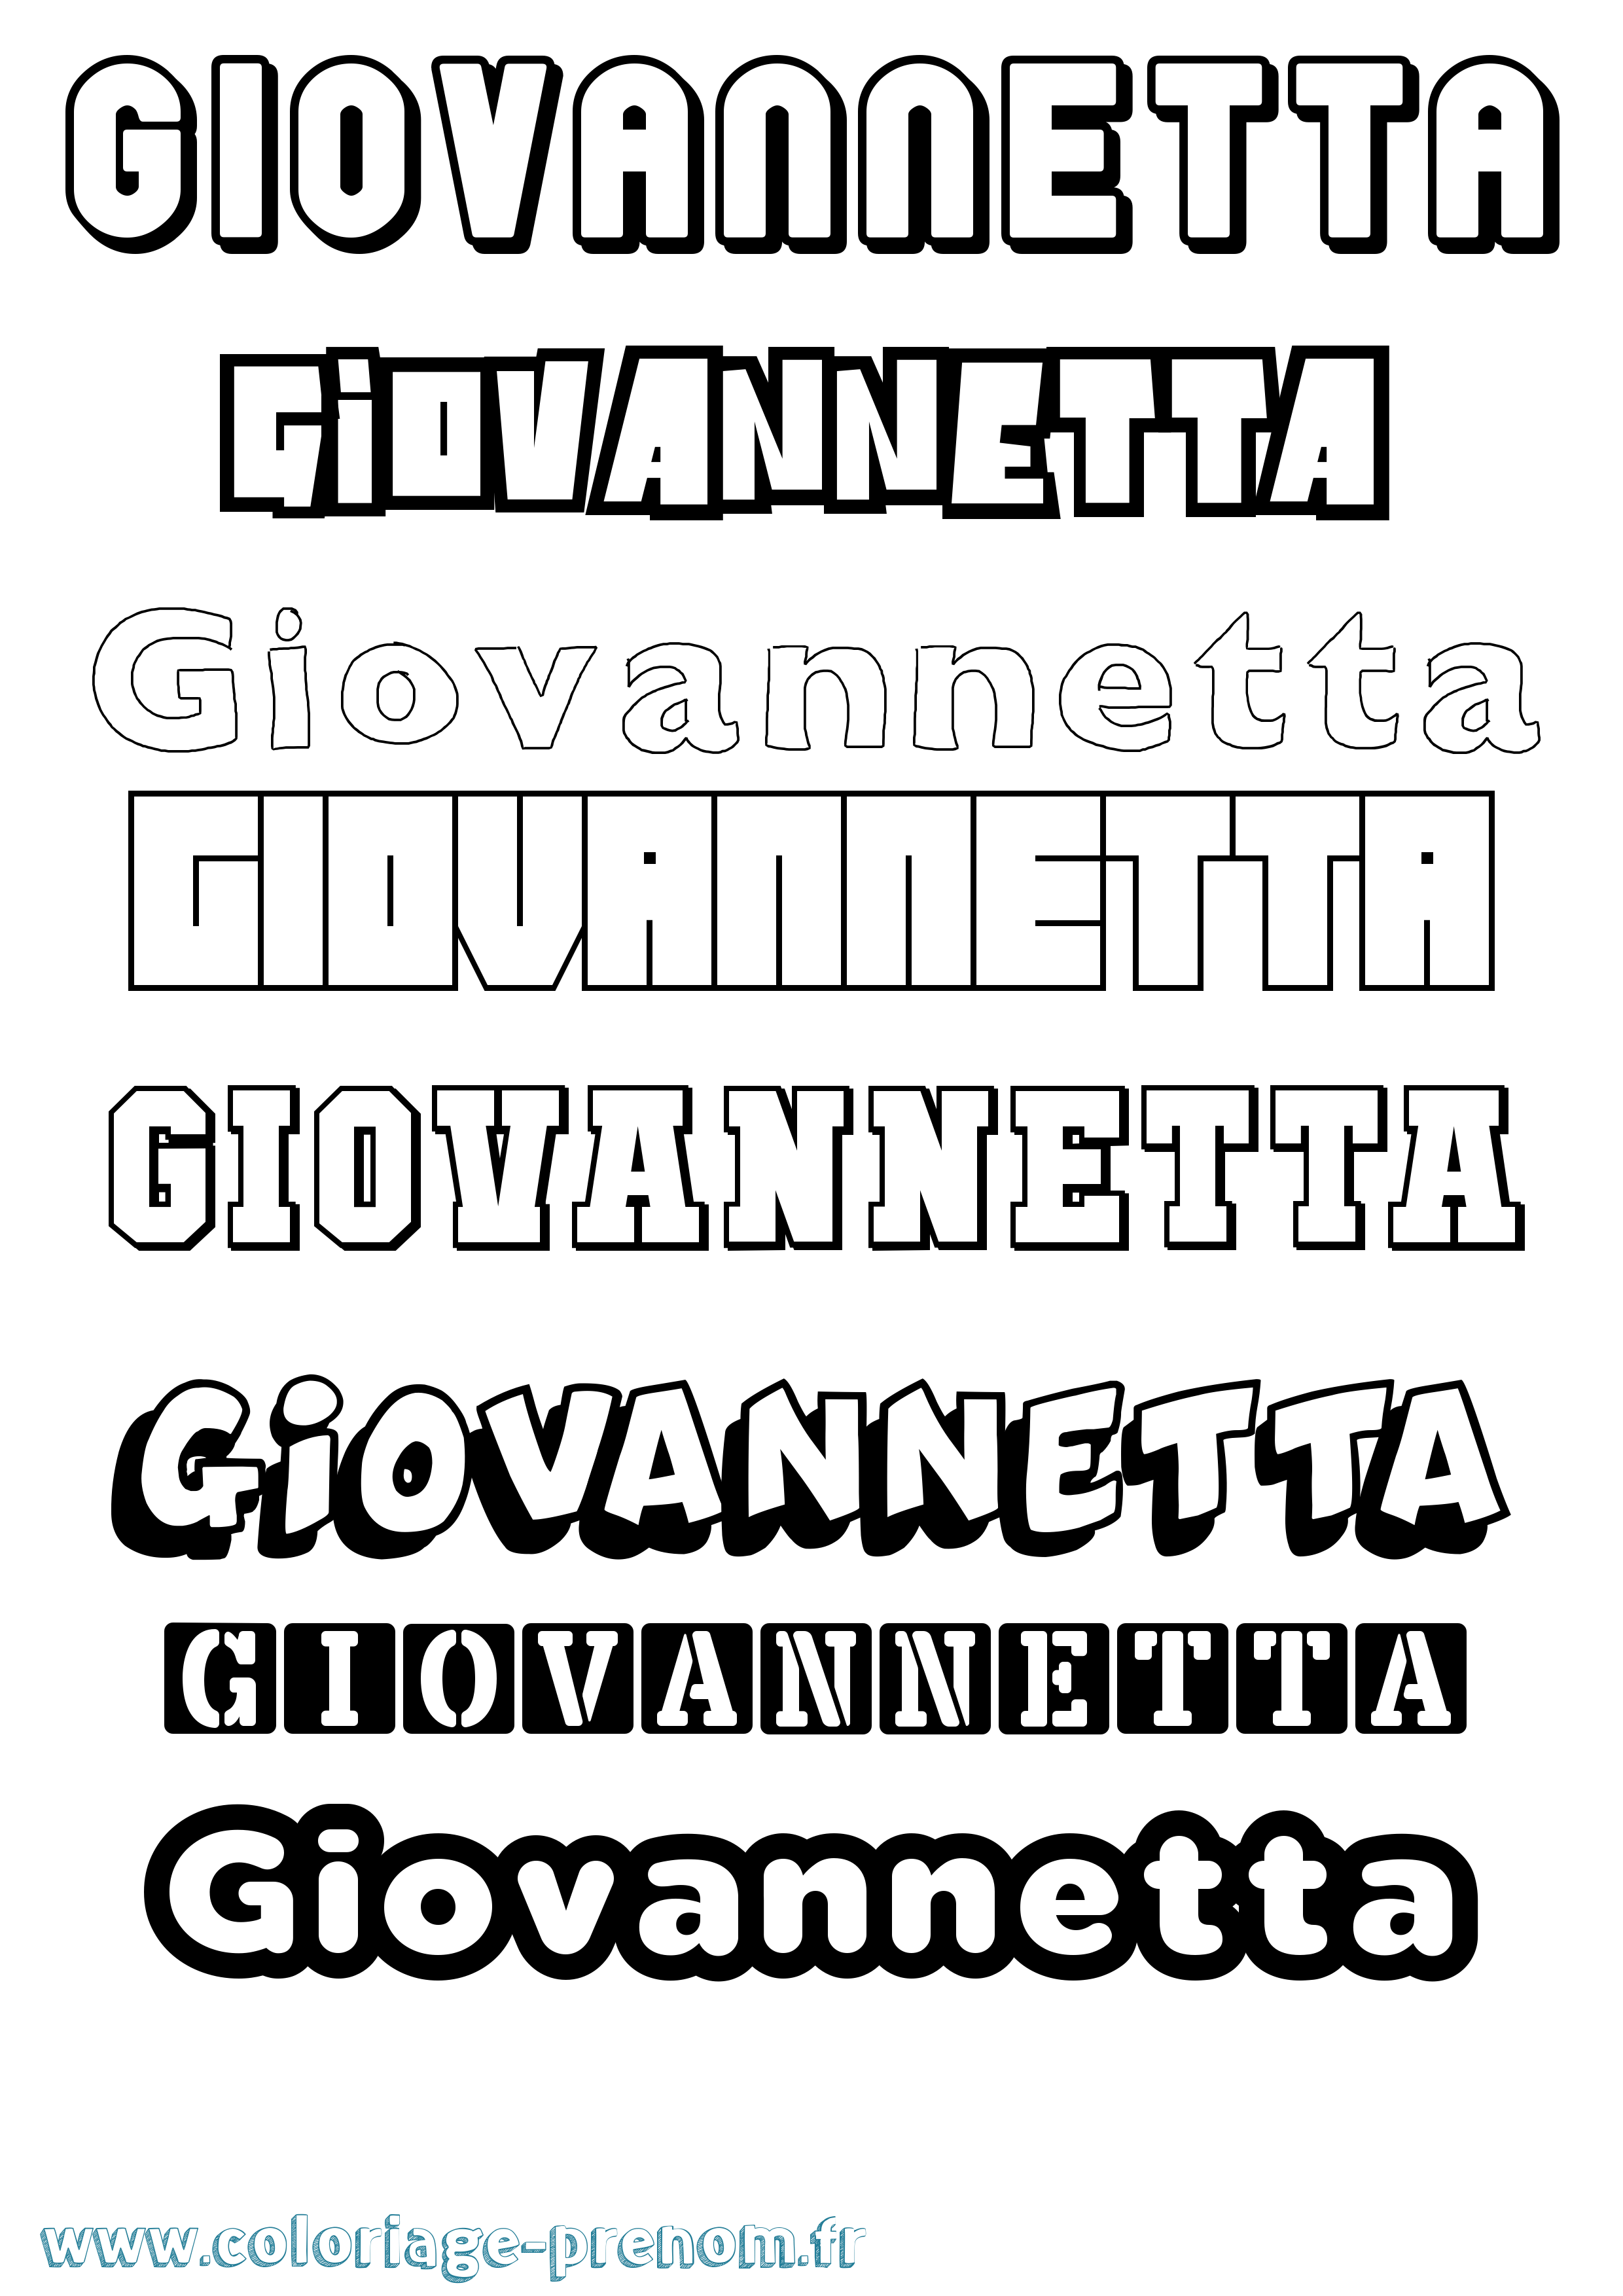 Coloriage prénom Giovannetta Simple